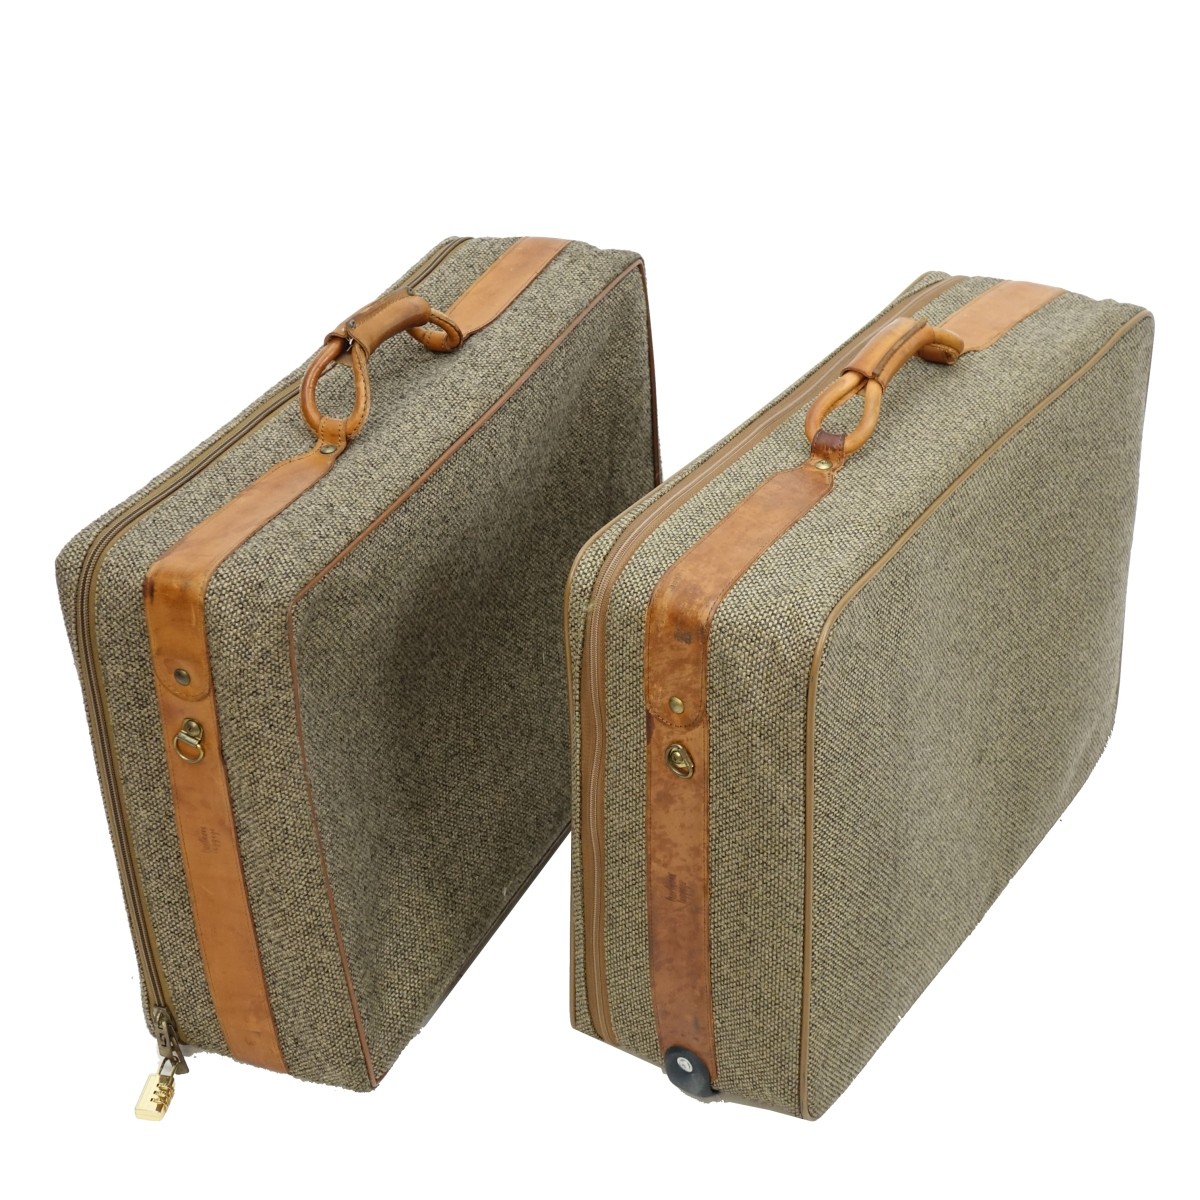 Two Vintage Hartmann Suitcases